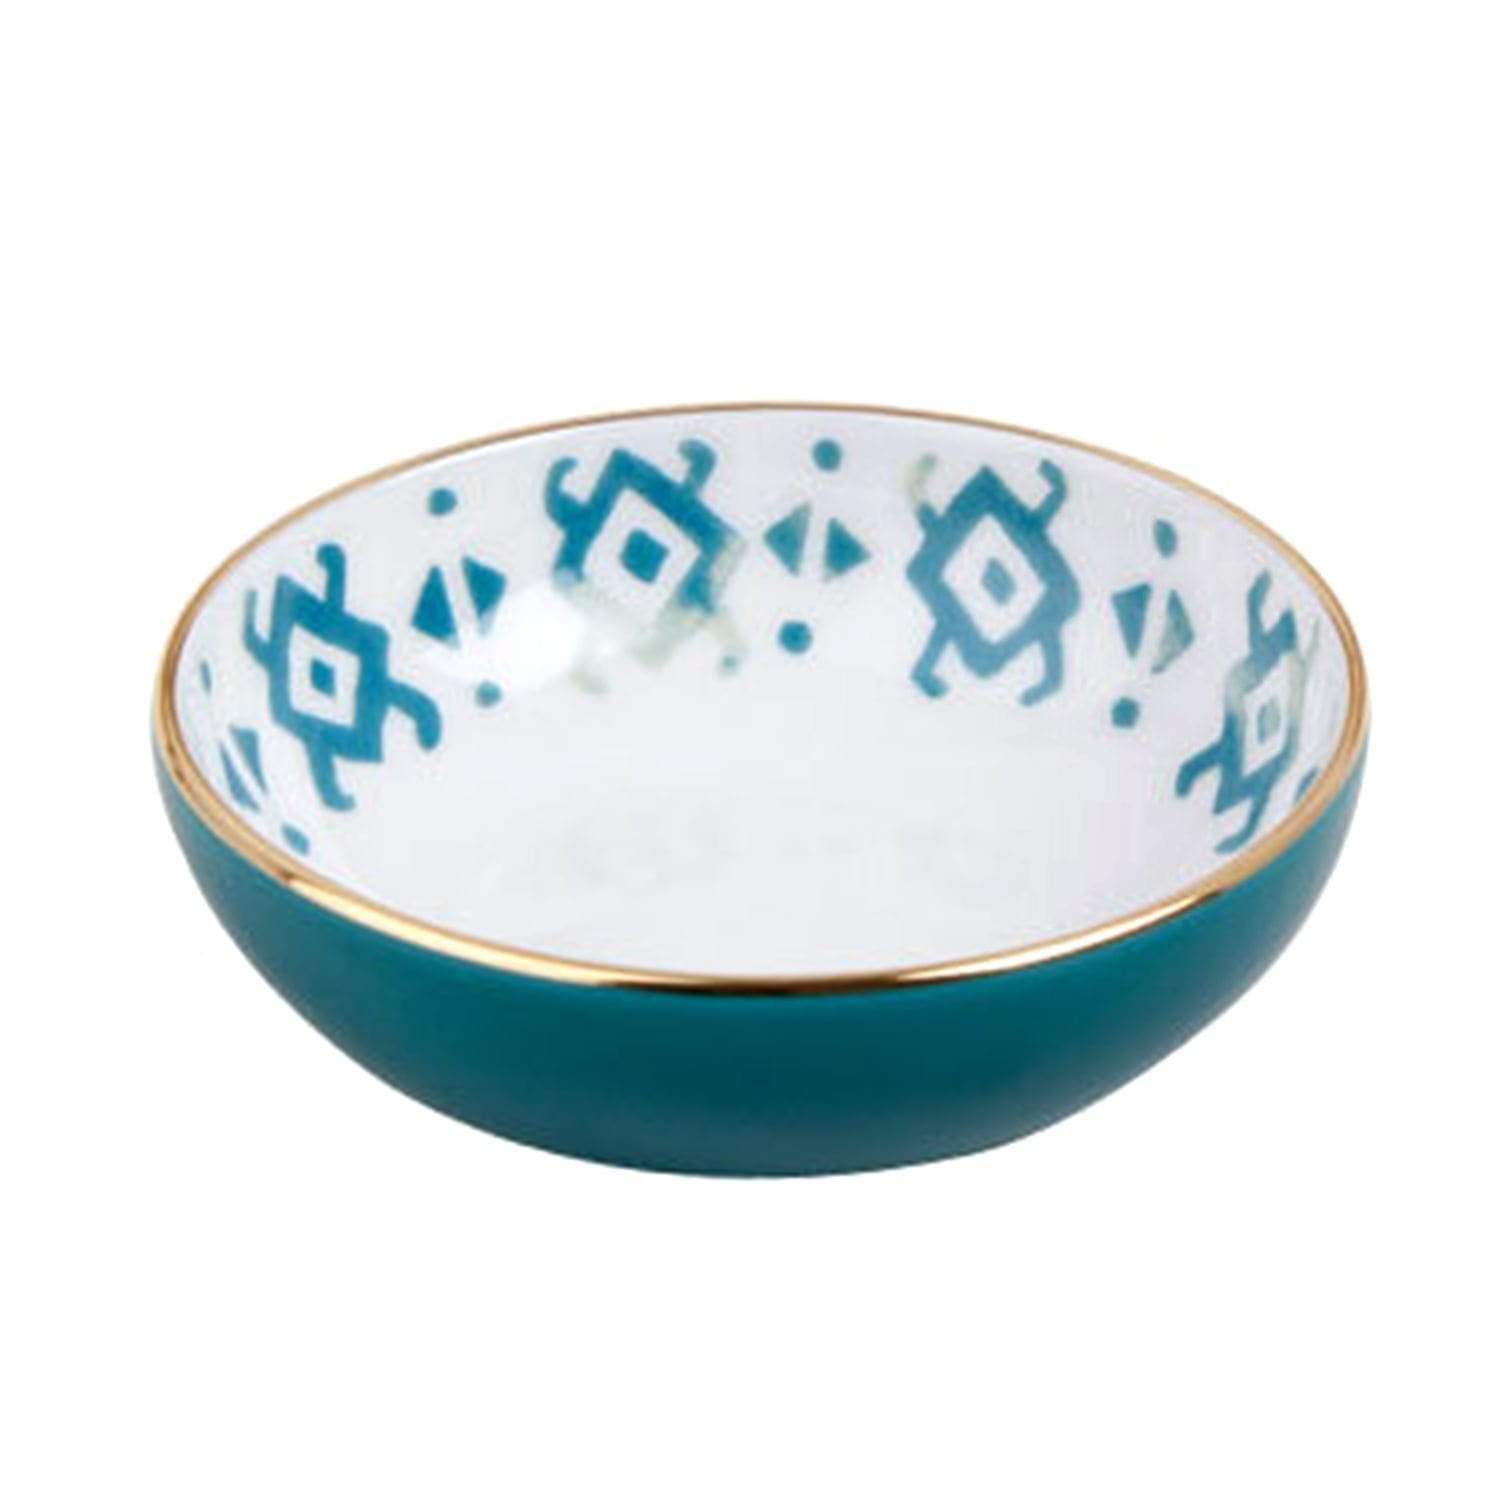 Porland Porselen Posh 10 cm Green Bowl - White and Blue - 04ALM003614 - Jashanmal Home